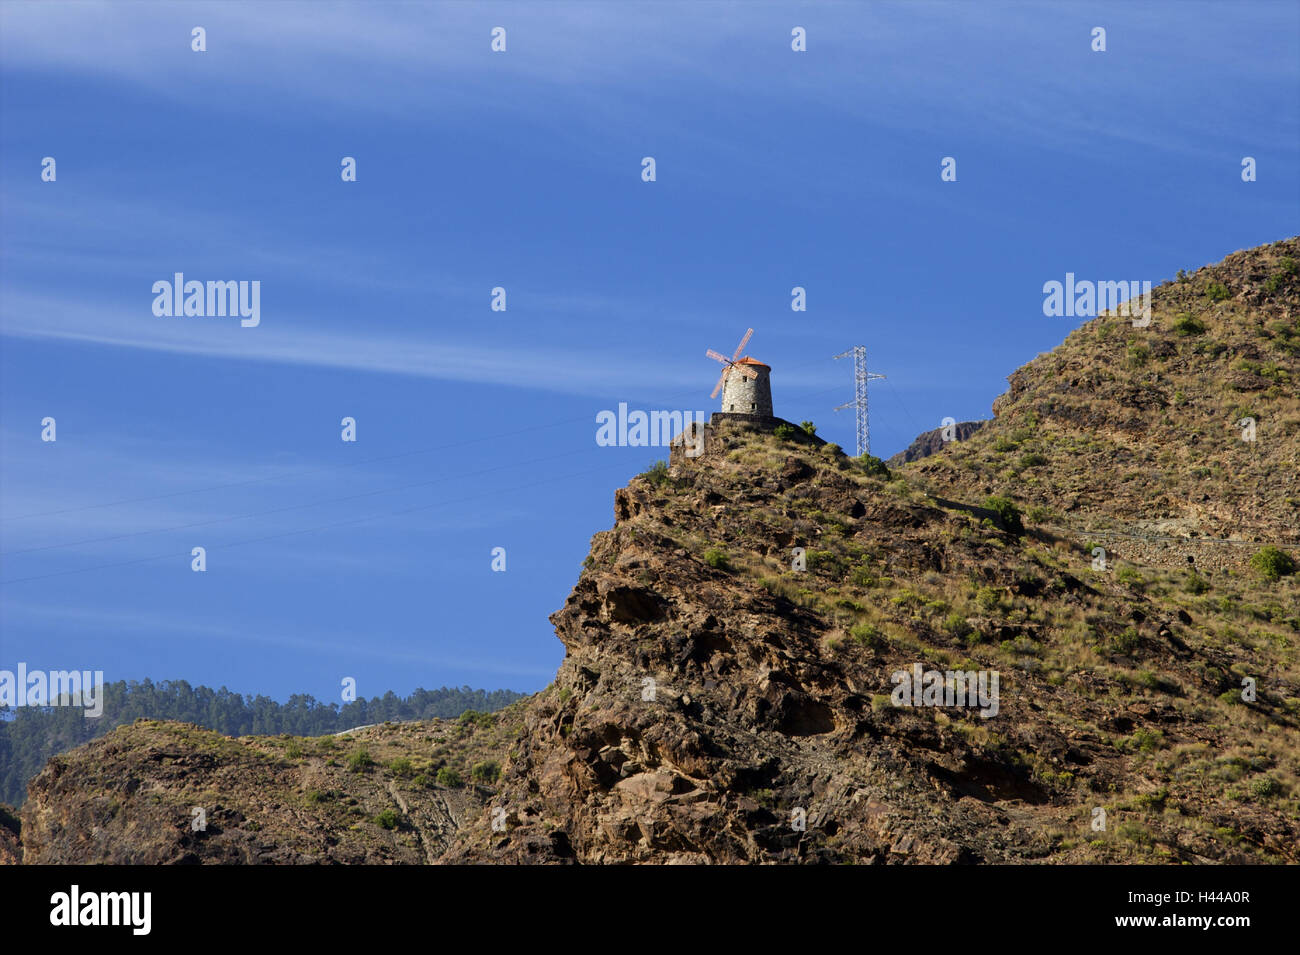 Spain, Canary islands, grain Canaria, central massif, Barranco de la Aldea, rocks, windmill, power poles, Stock Photo